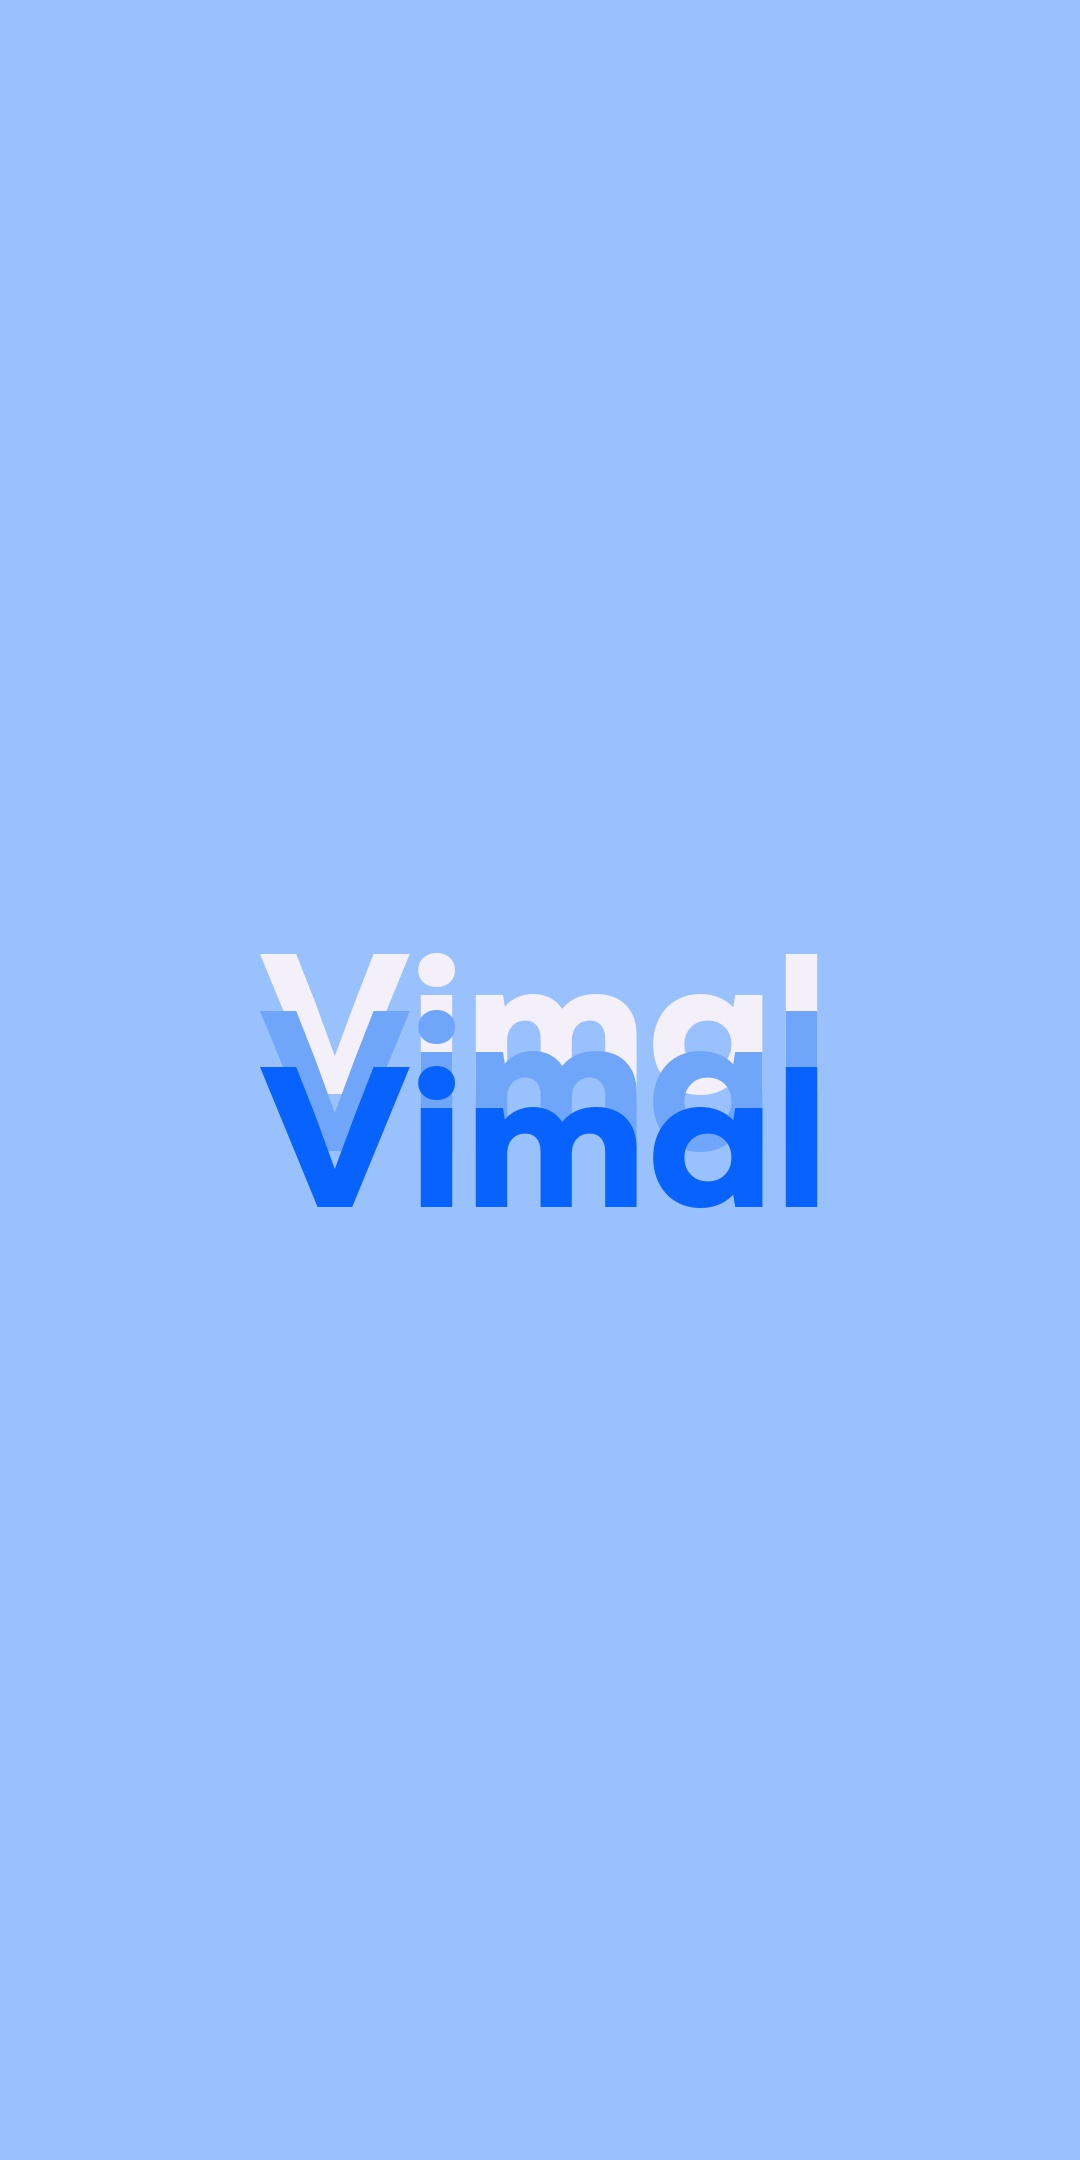 VIMAL - Visual Intelligence and Multimedia Analytics Laboratory